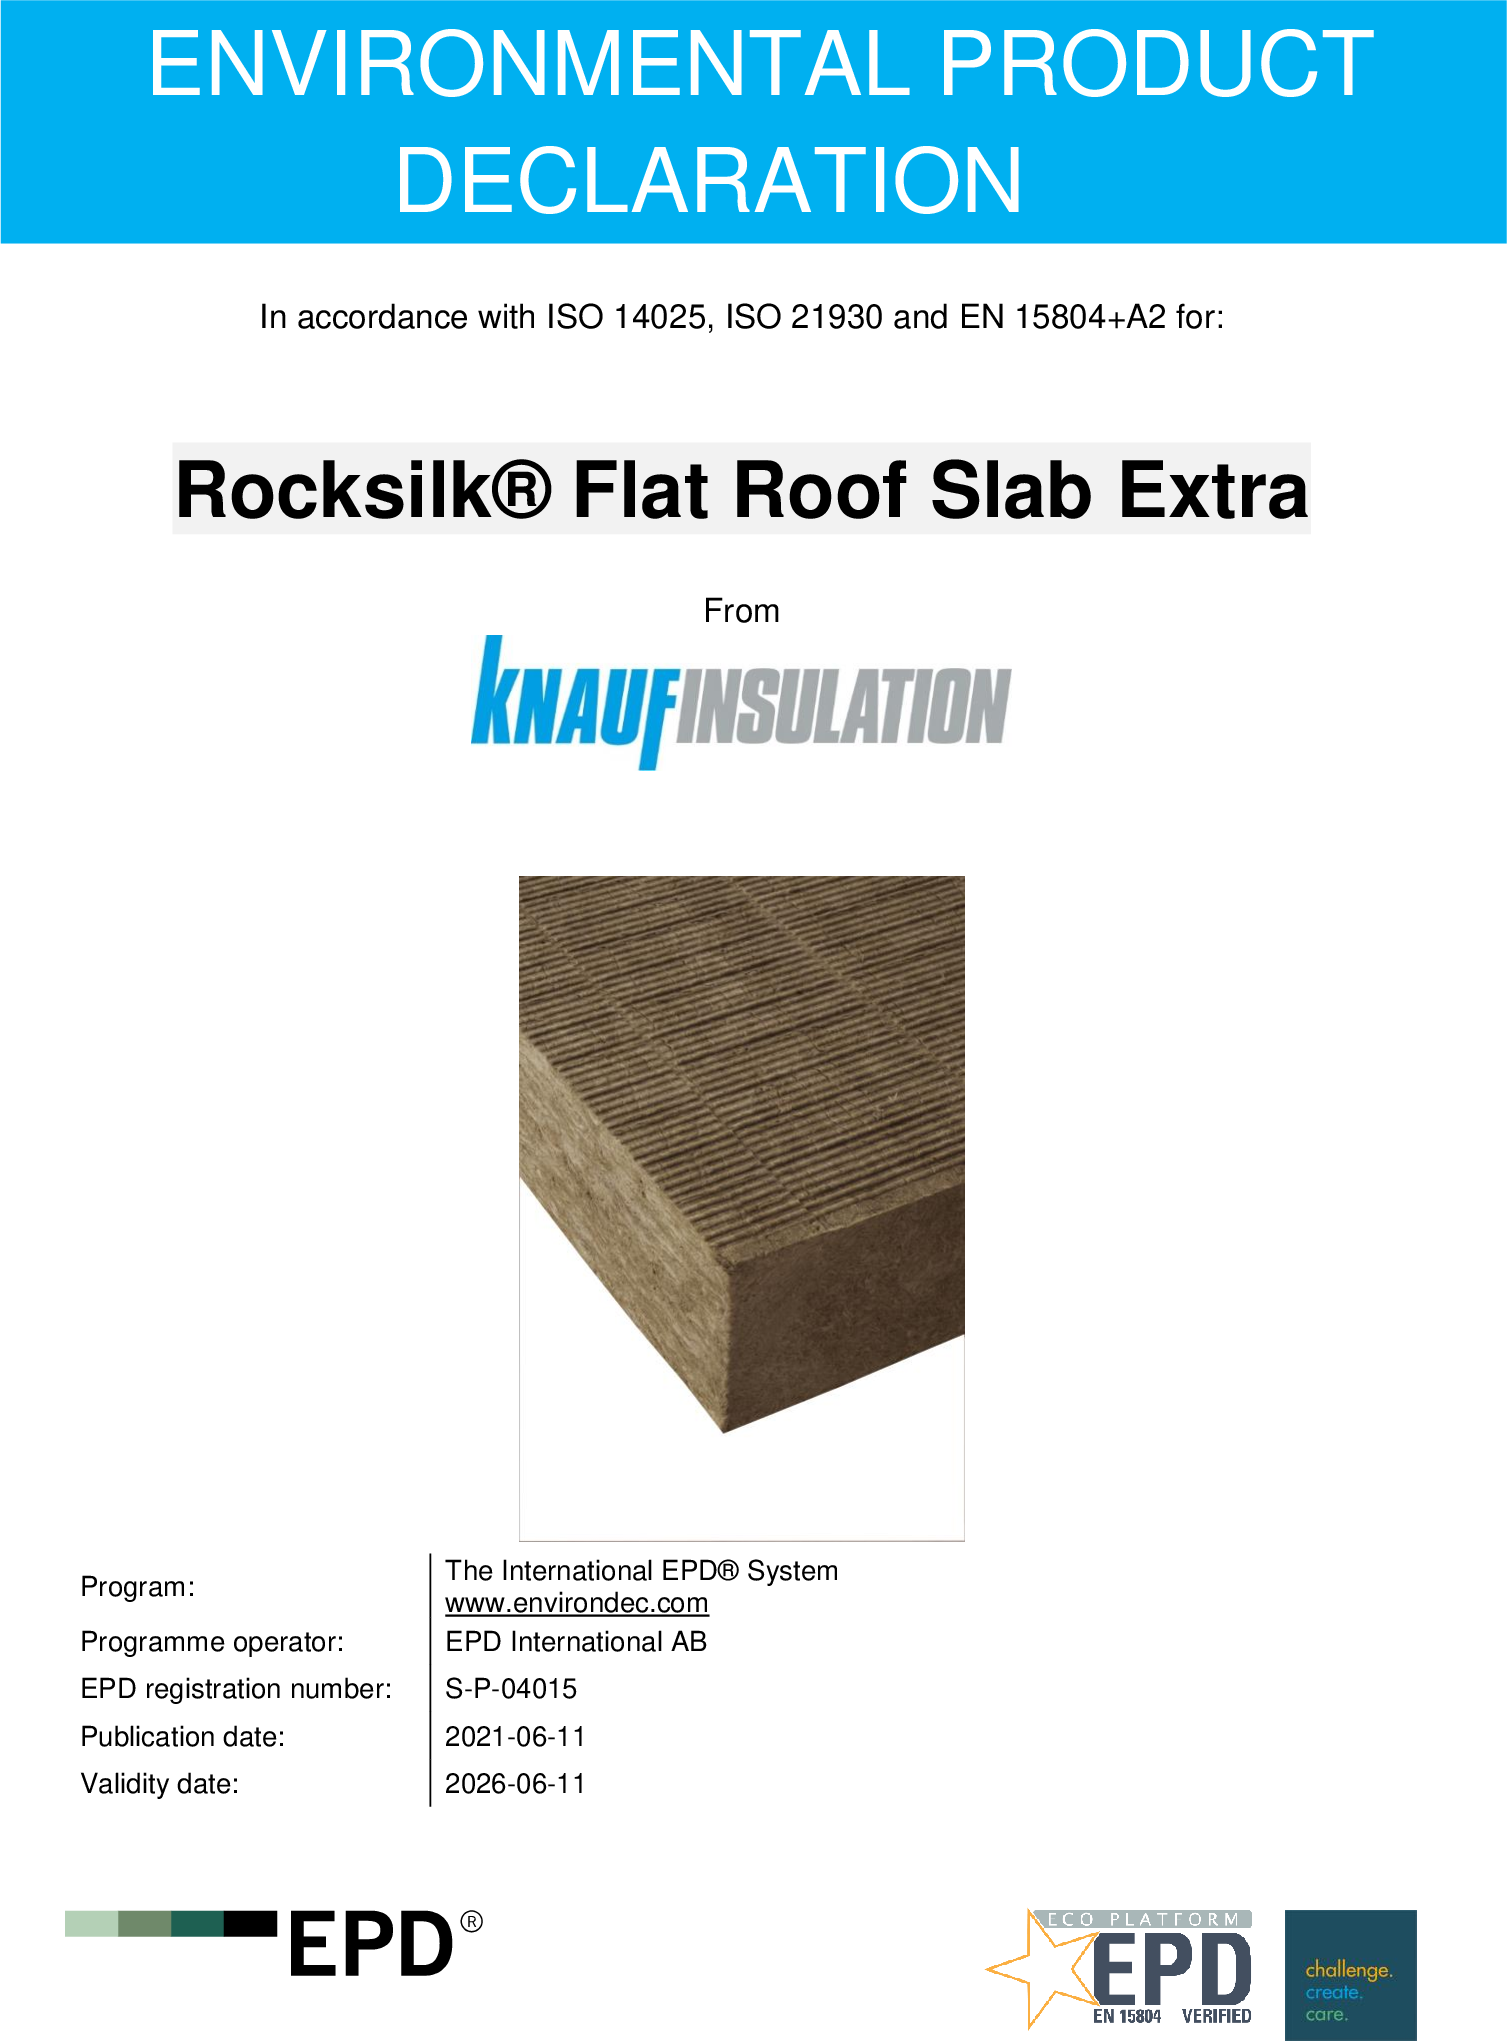 Rocksilk Flat Roof Slab Extra